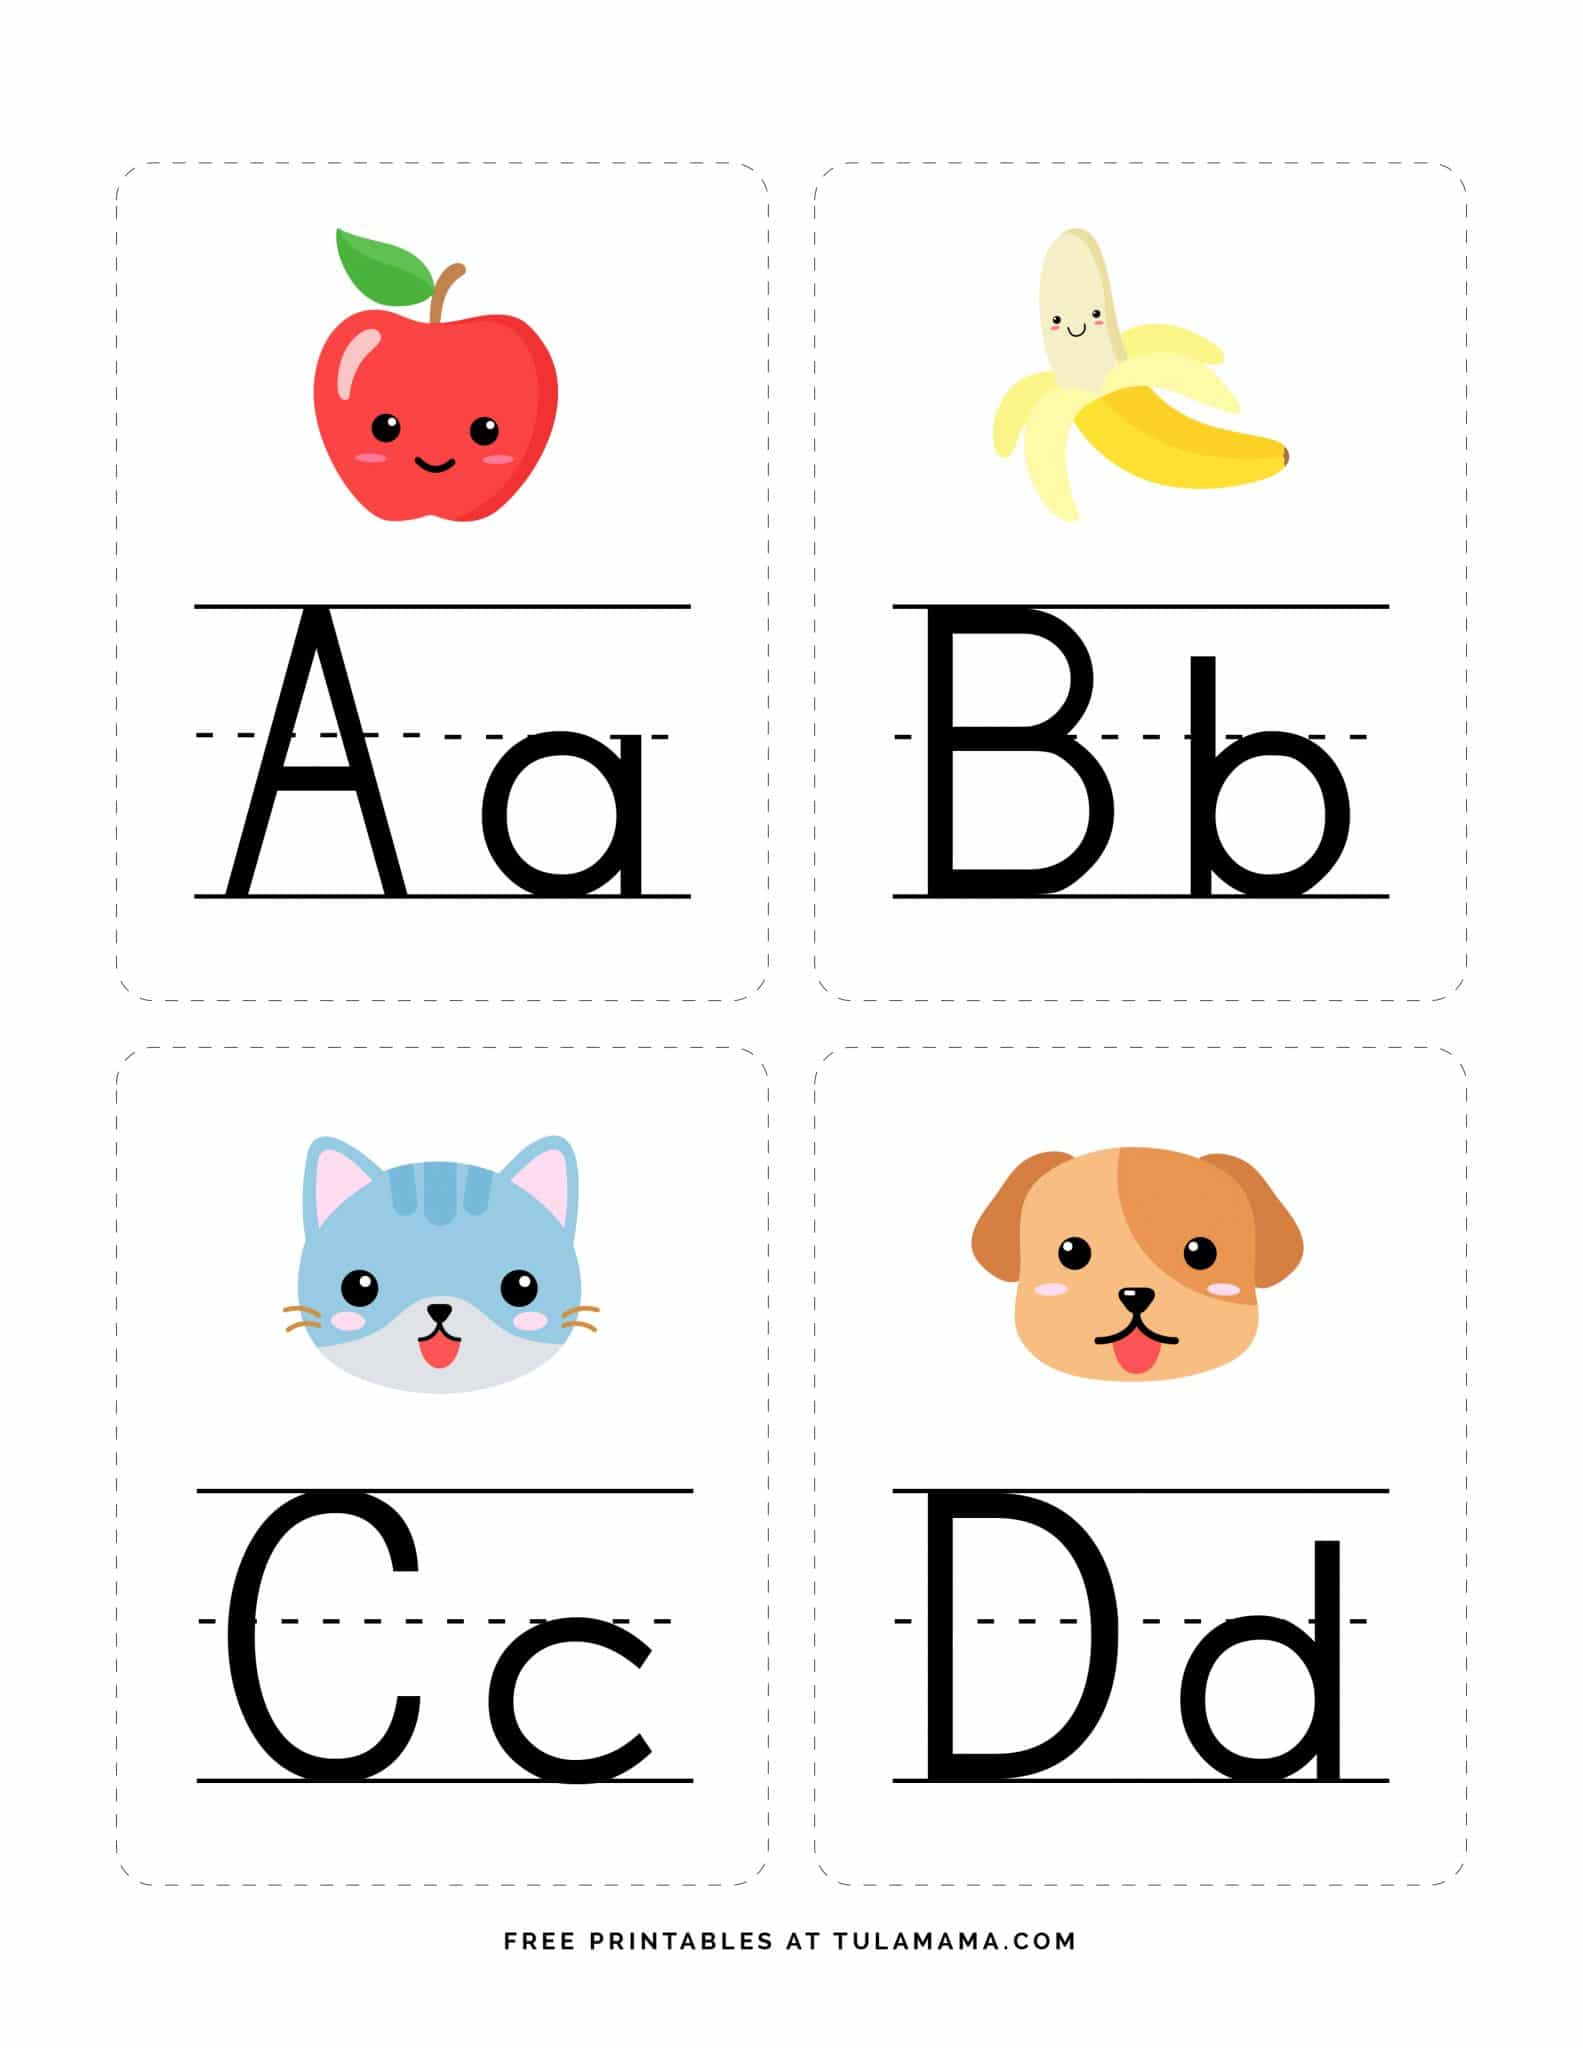 fun-free-engaging-alphabet-flash-cards-for-preschoolers-tulamama